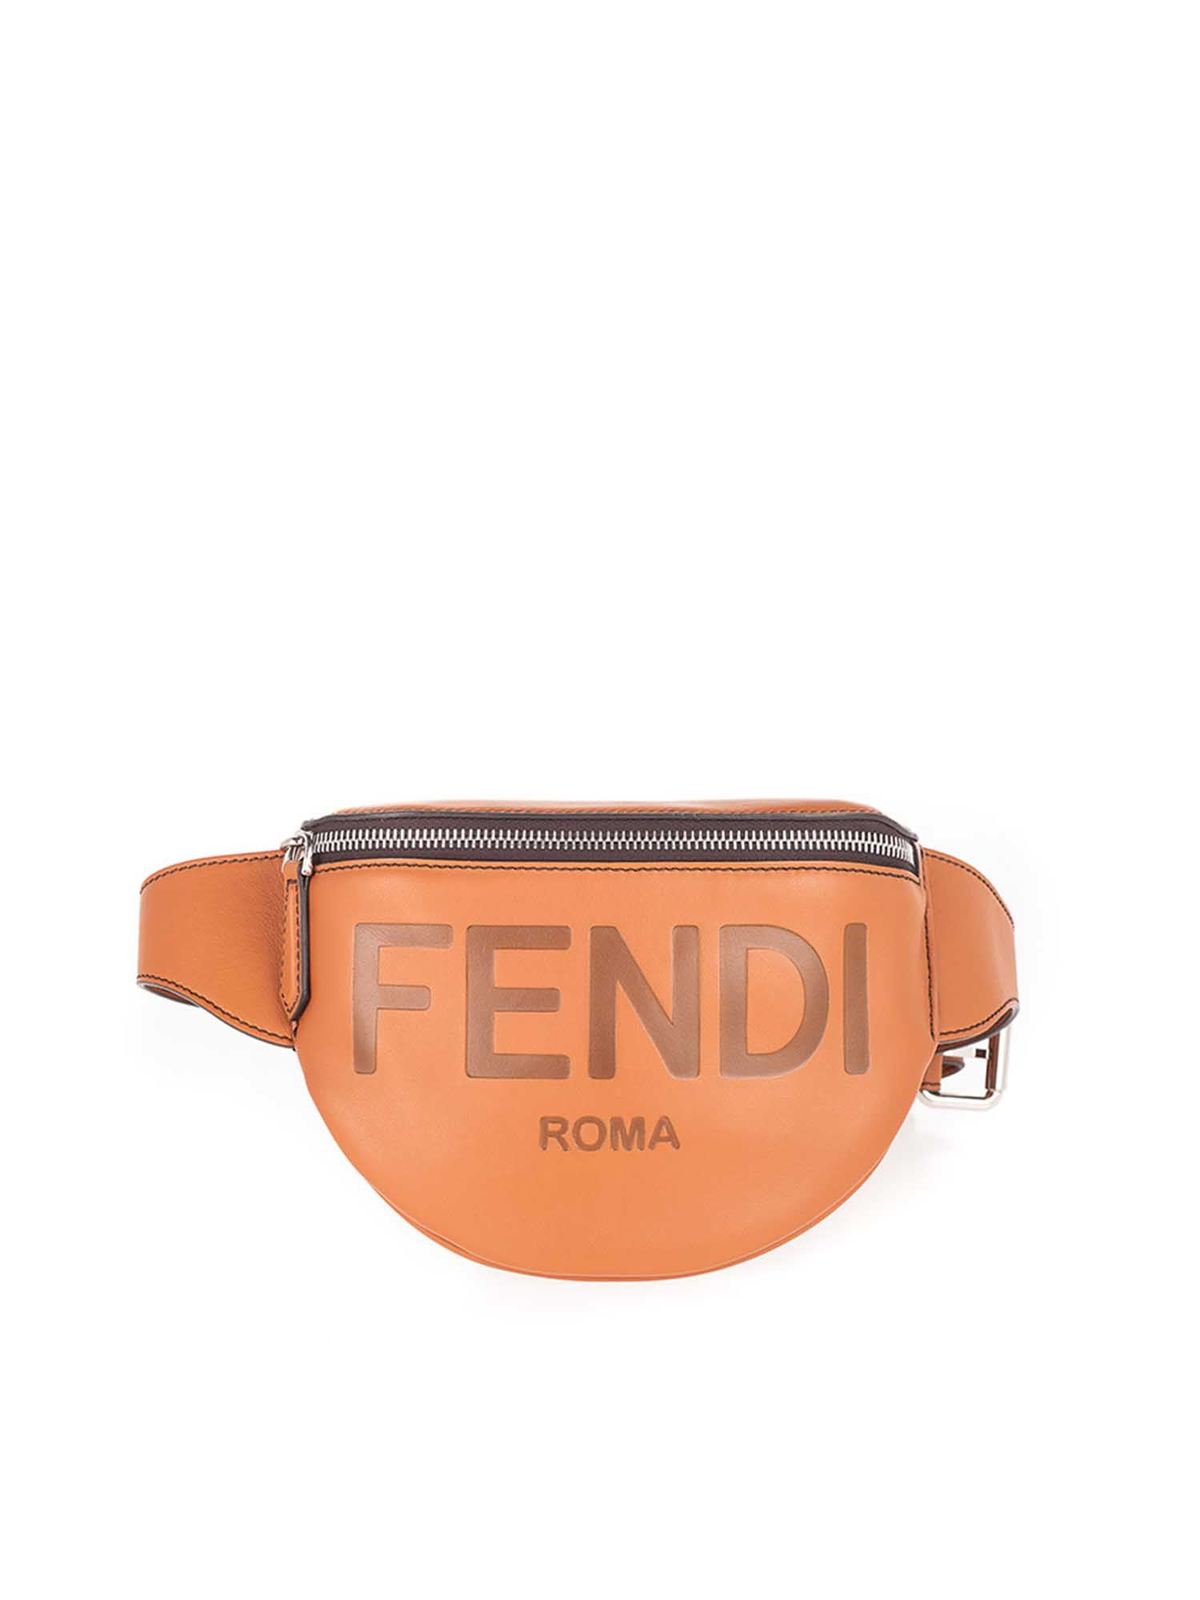 Belt Fendi - Fendi Roma belt bag in brown - 7VA525AFBFF1DZ9